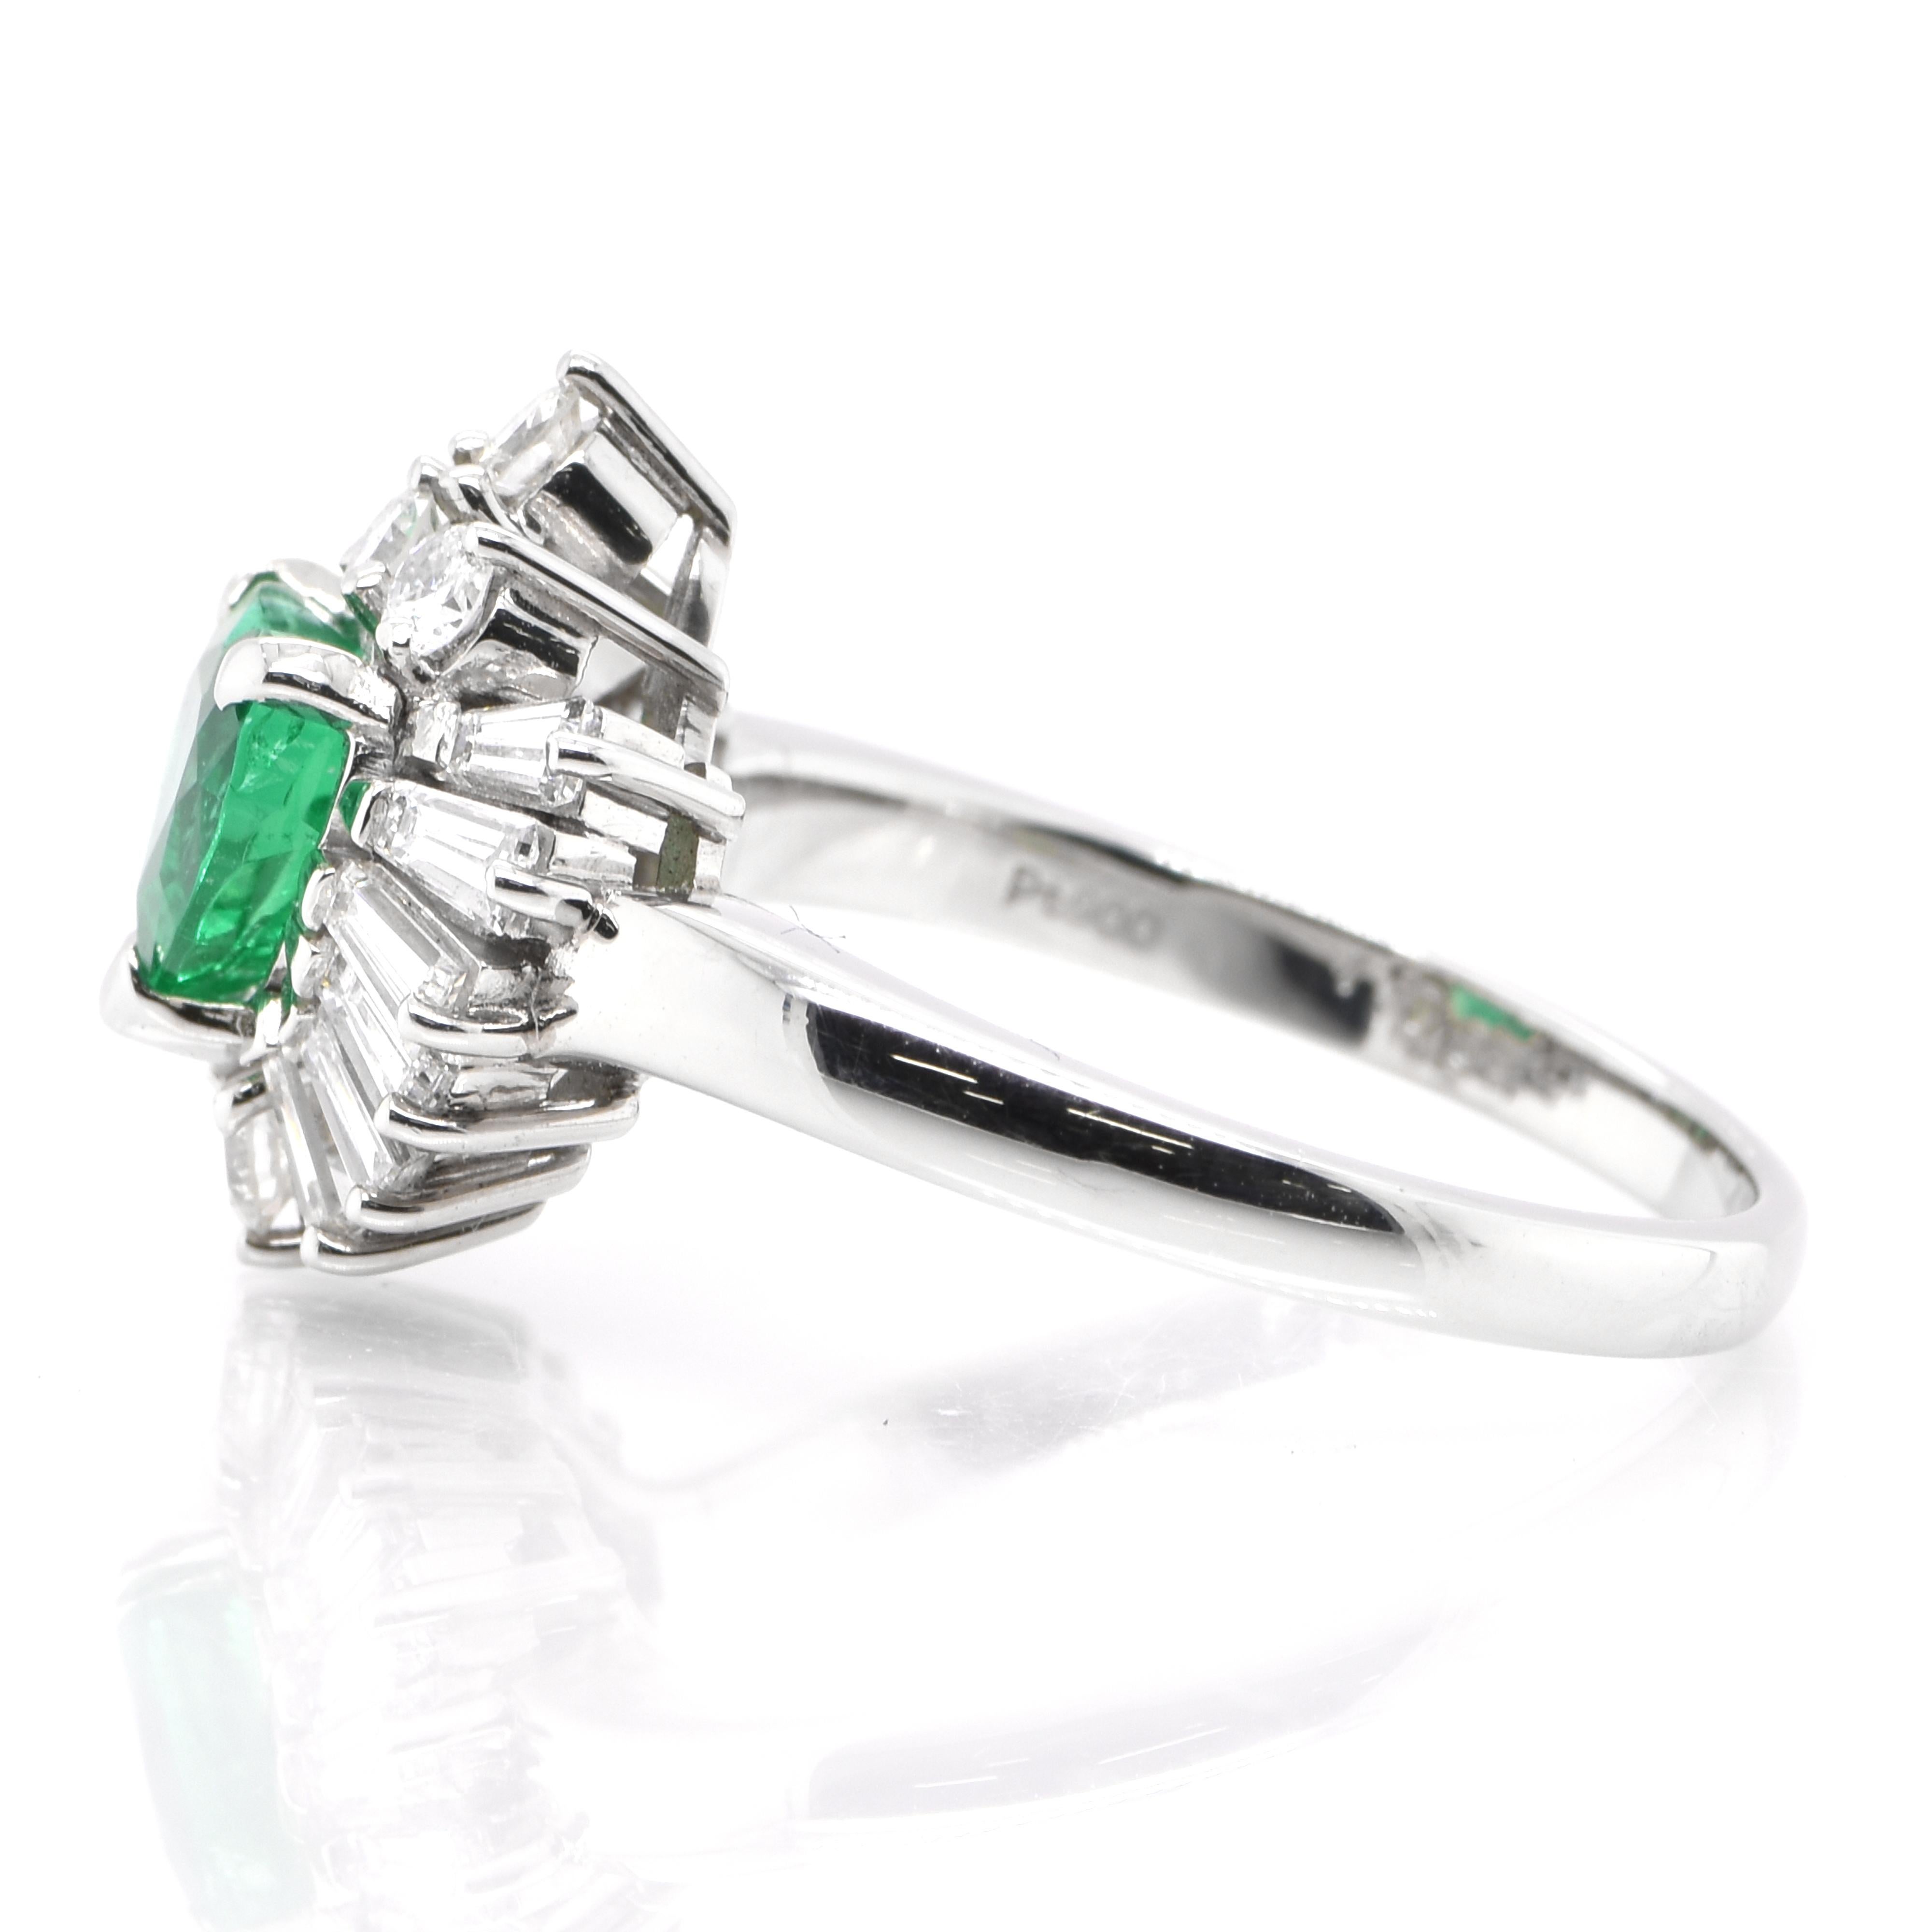 Heart Cut 1.03 Carat Natural Heart Shape Emerald and Diamond Ring Set in Platinum